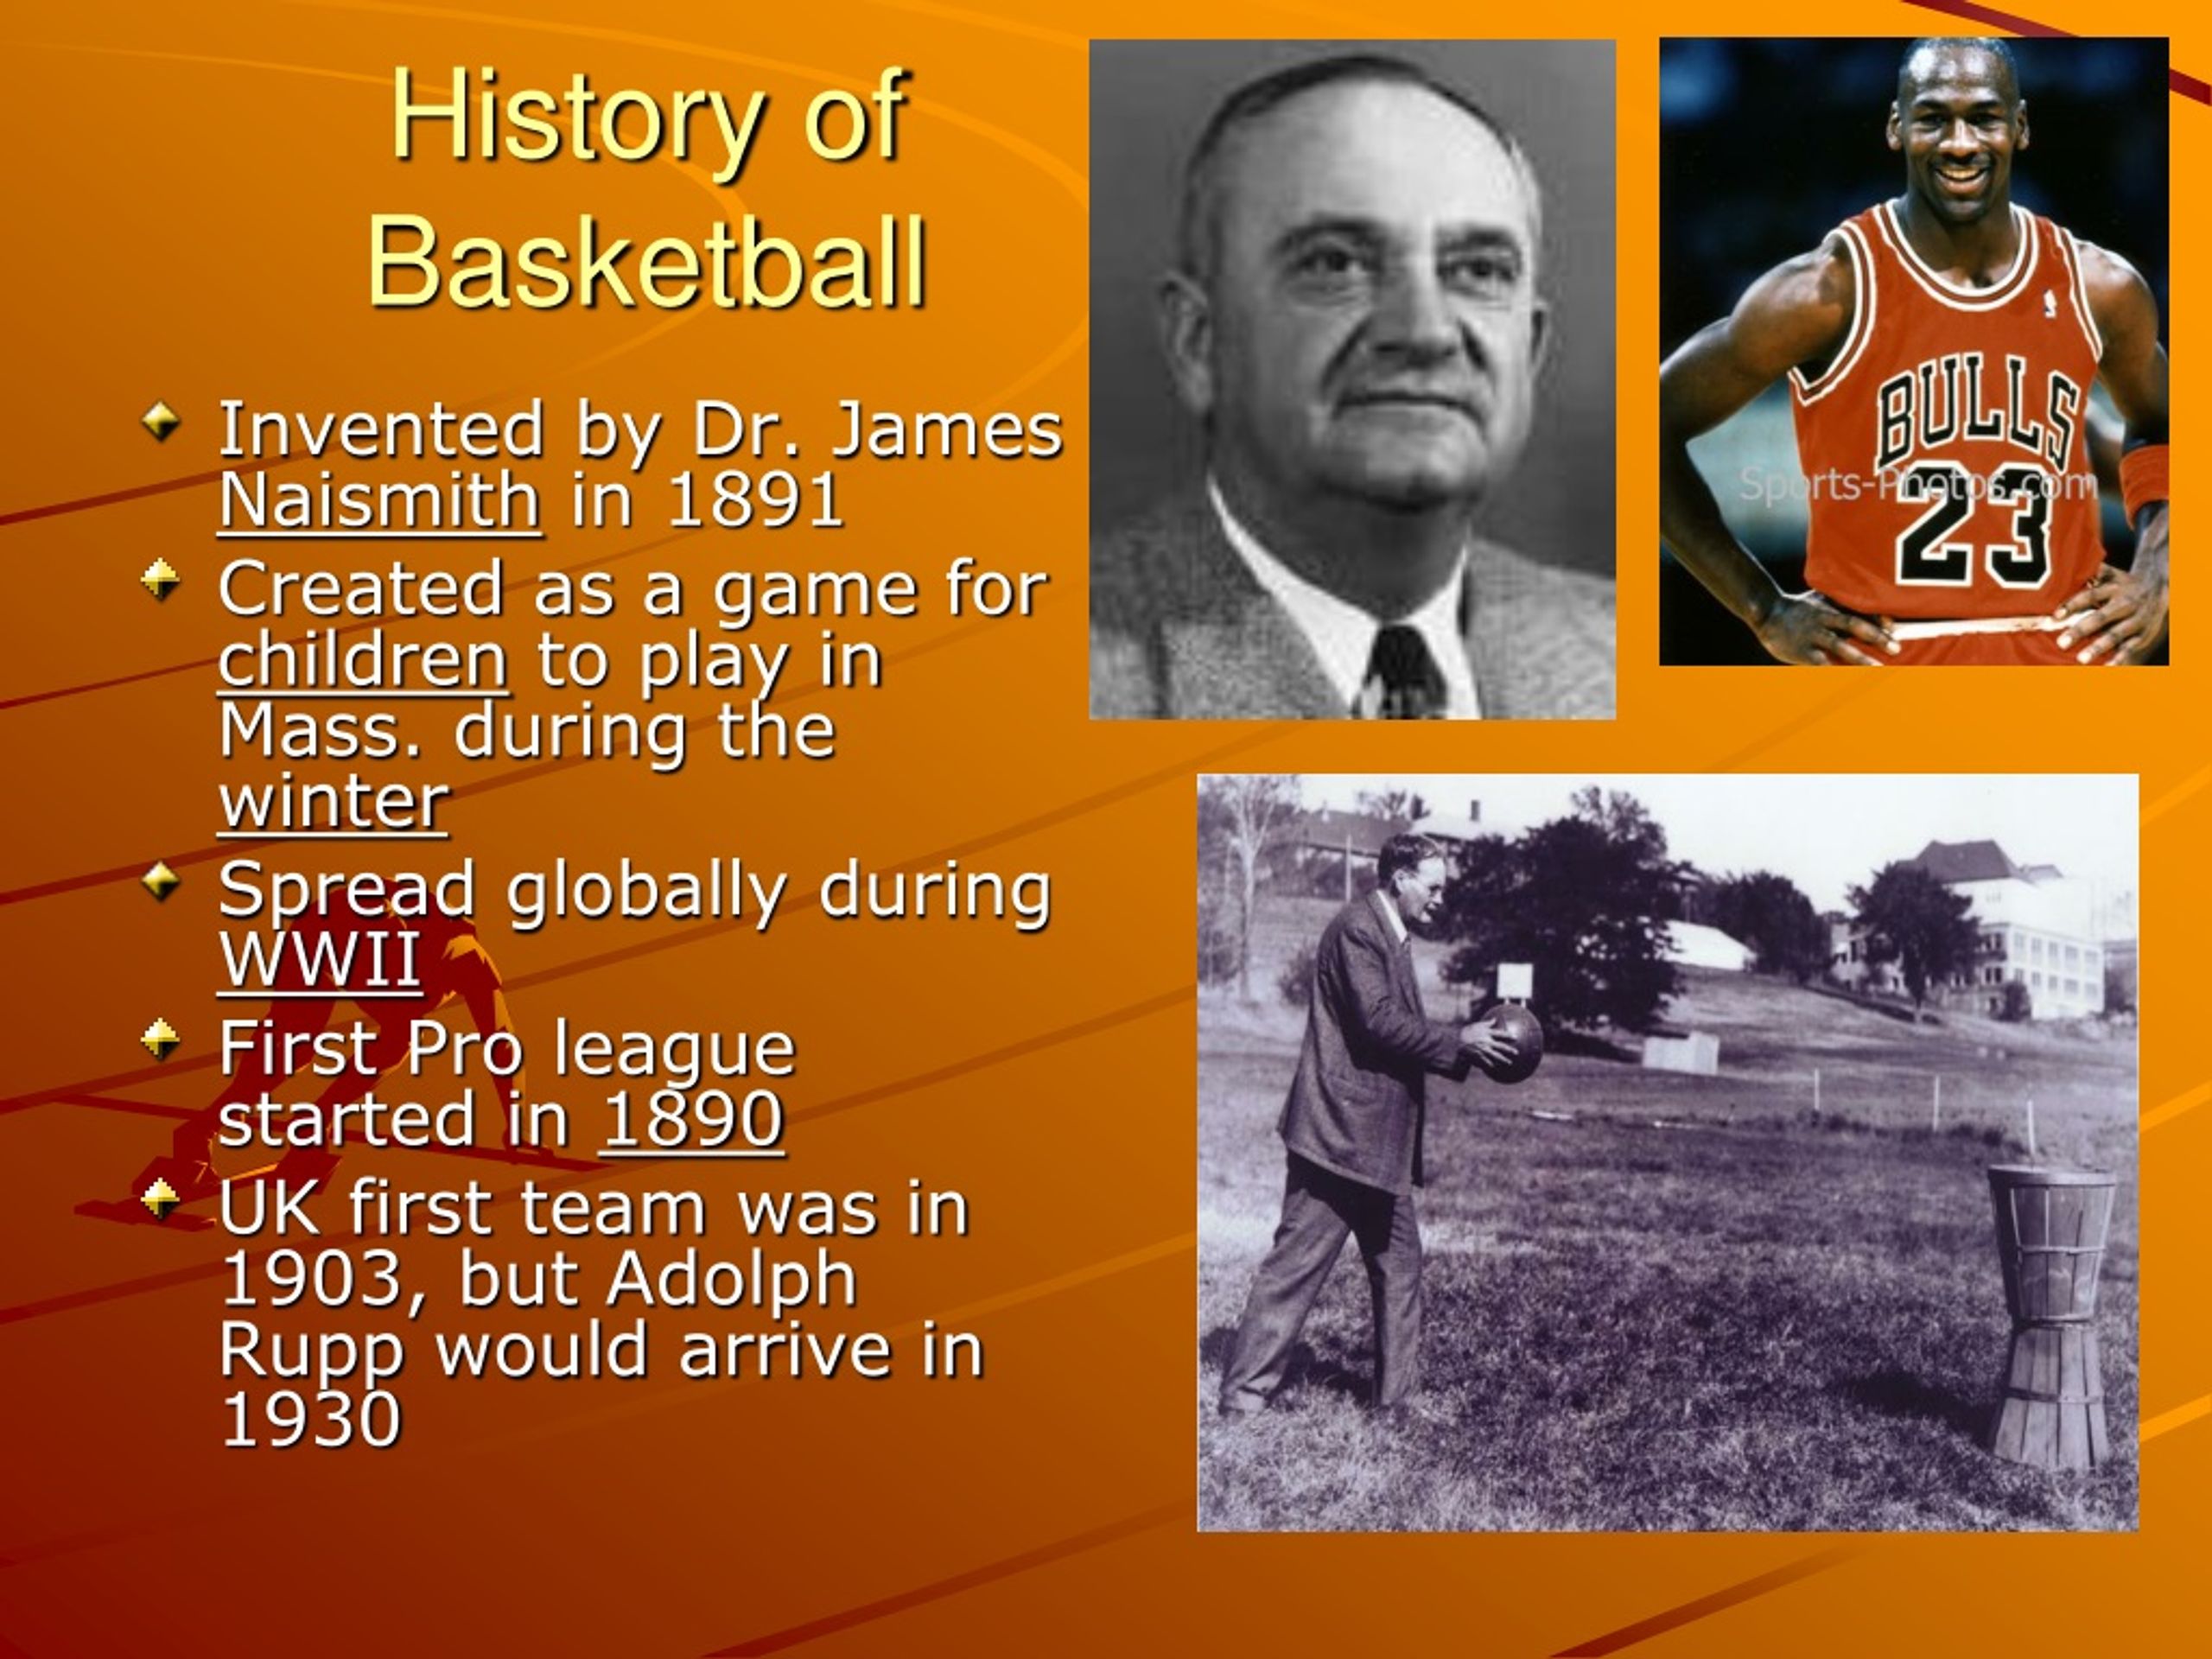 the history of basketball presentation